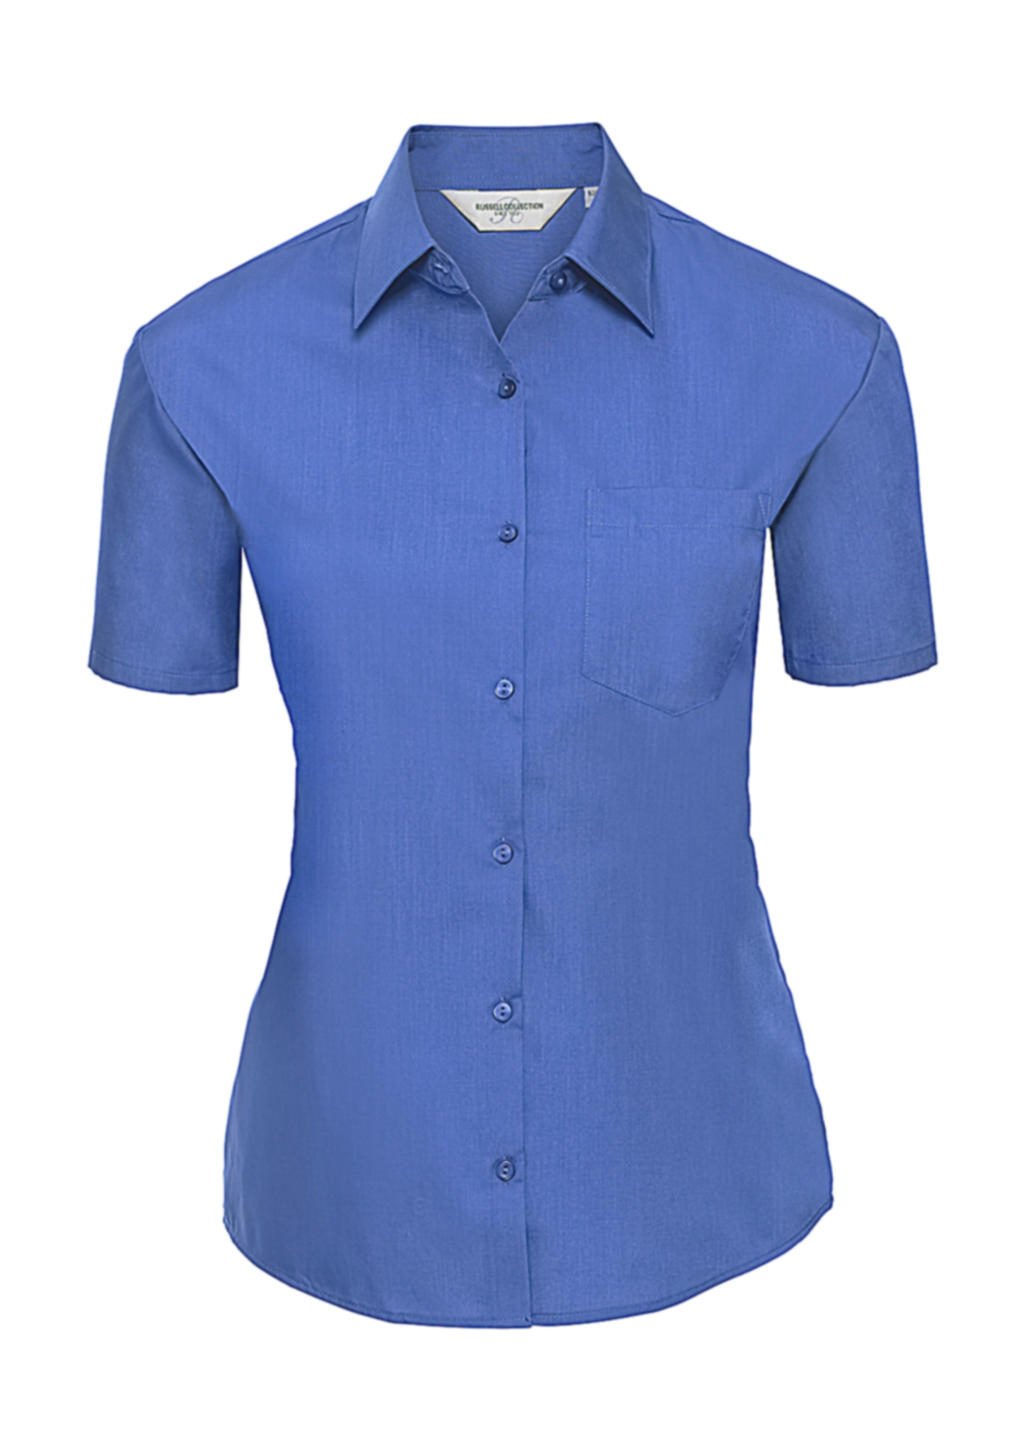  Ladies Poplin Shirt in Farbe Corporate Blue